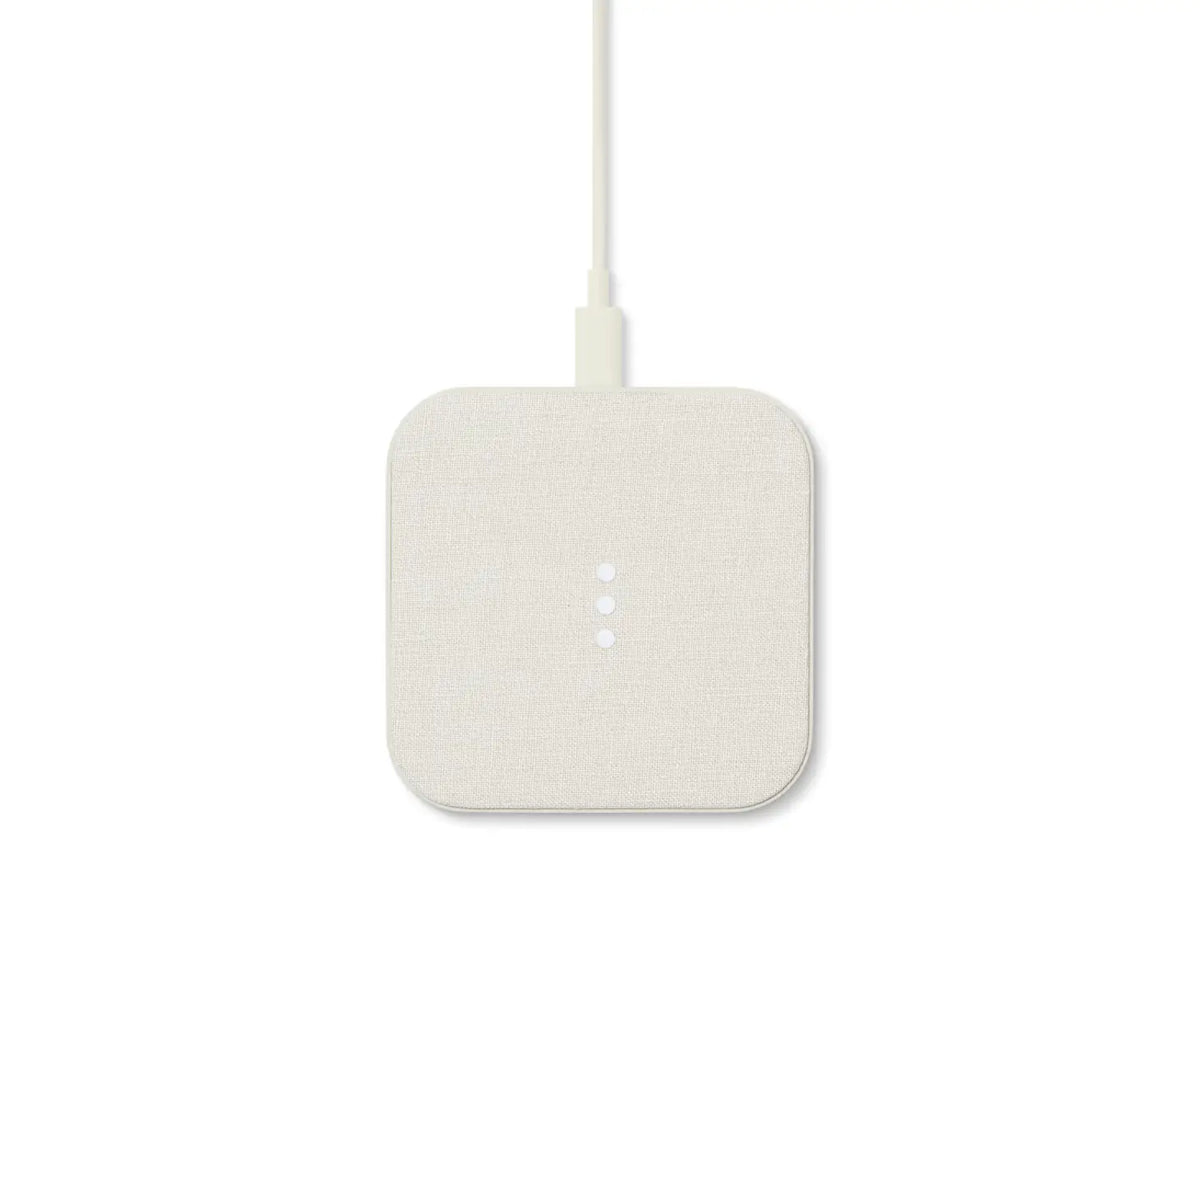 Catch:1 - Essentials Wireless Charger